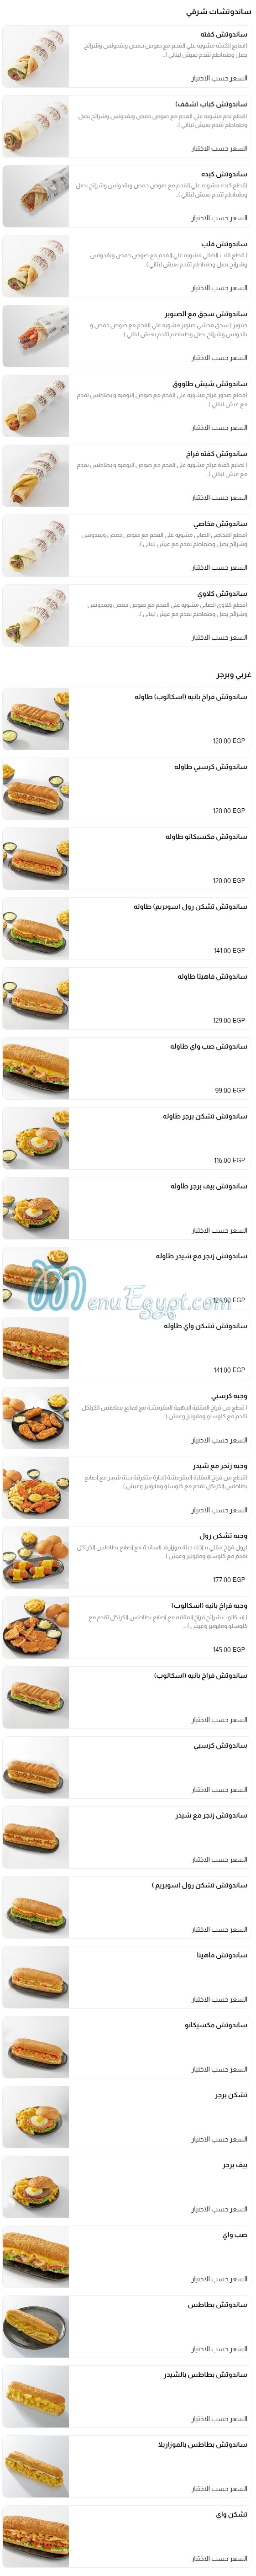 Batta Balady menu Egypt 4